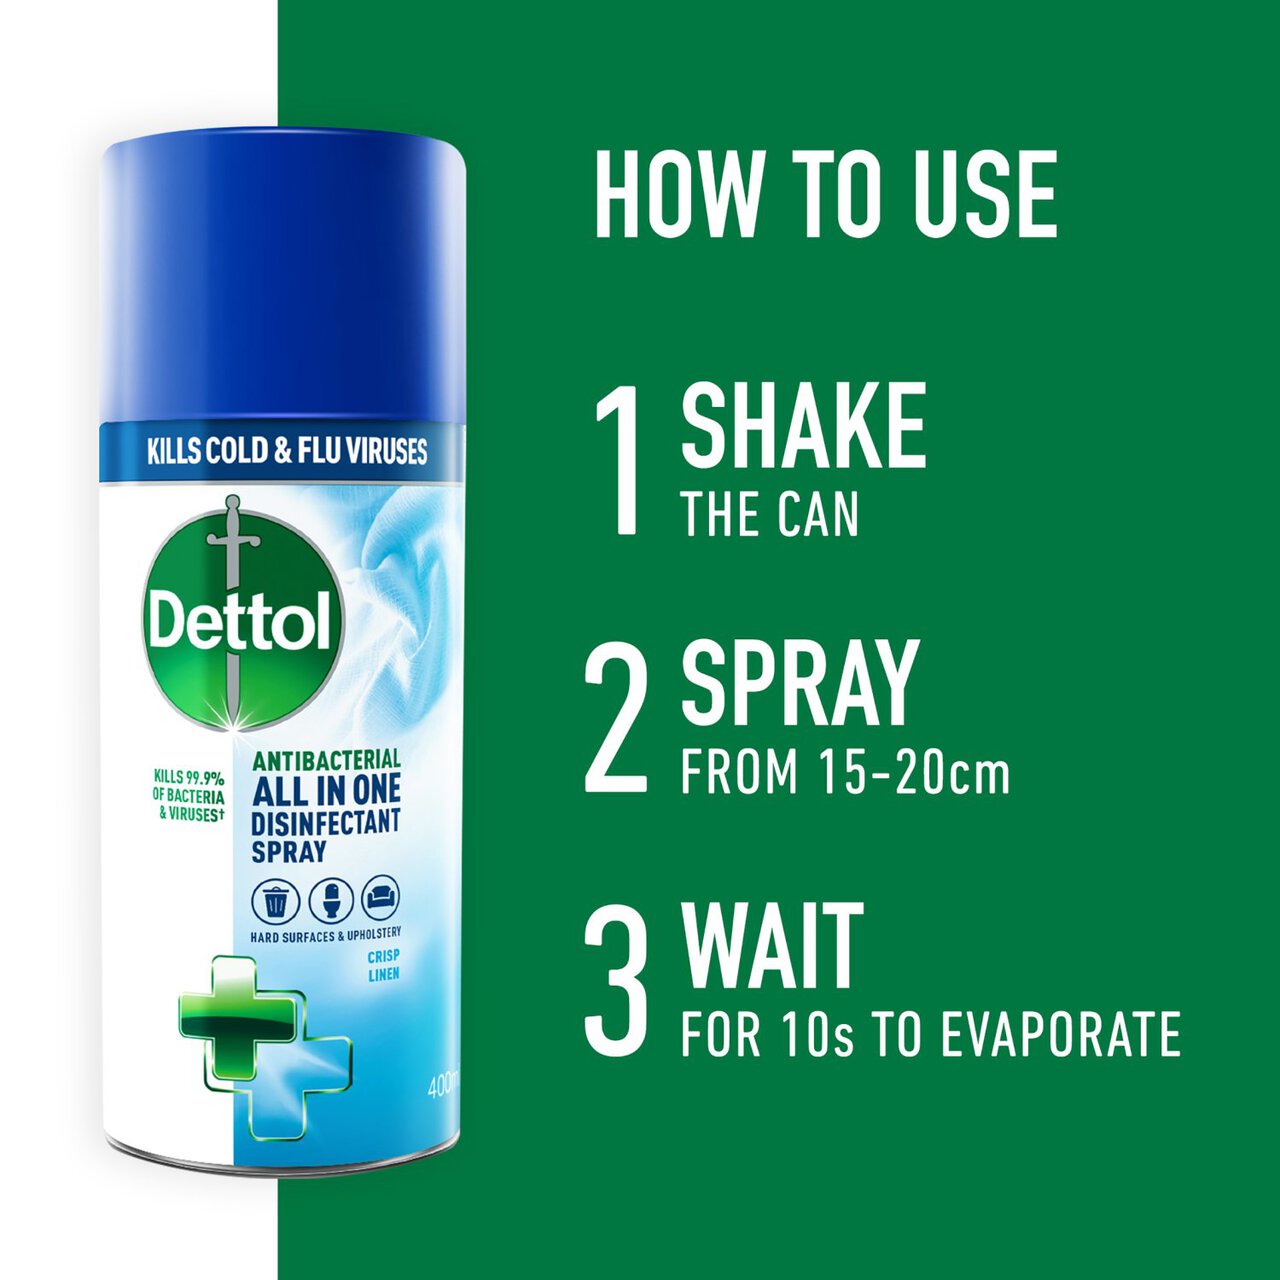 Dettol All In One Disinfectant Antibacterial Spray Crisp Linen 400ml